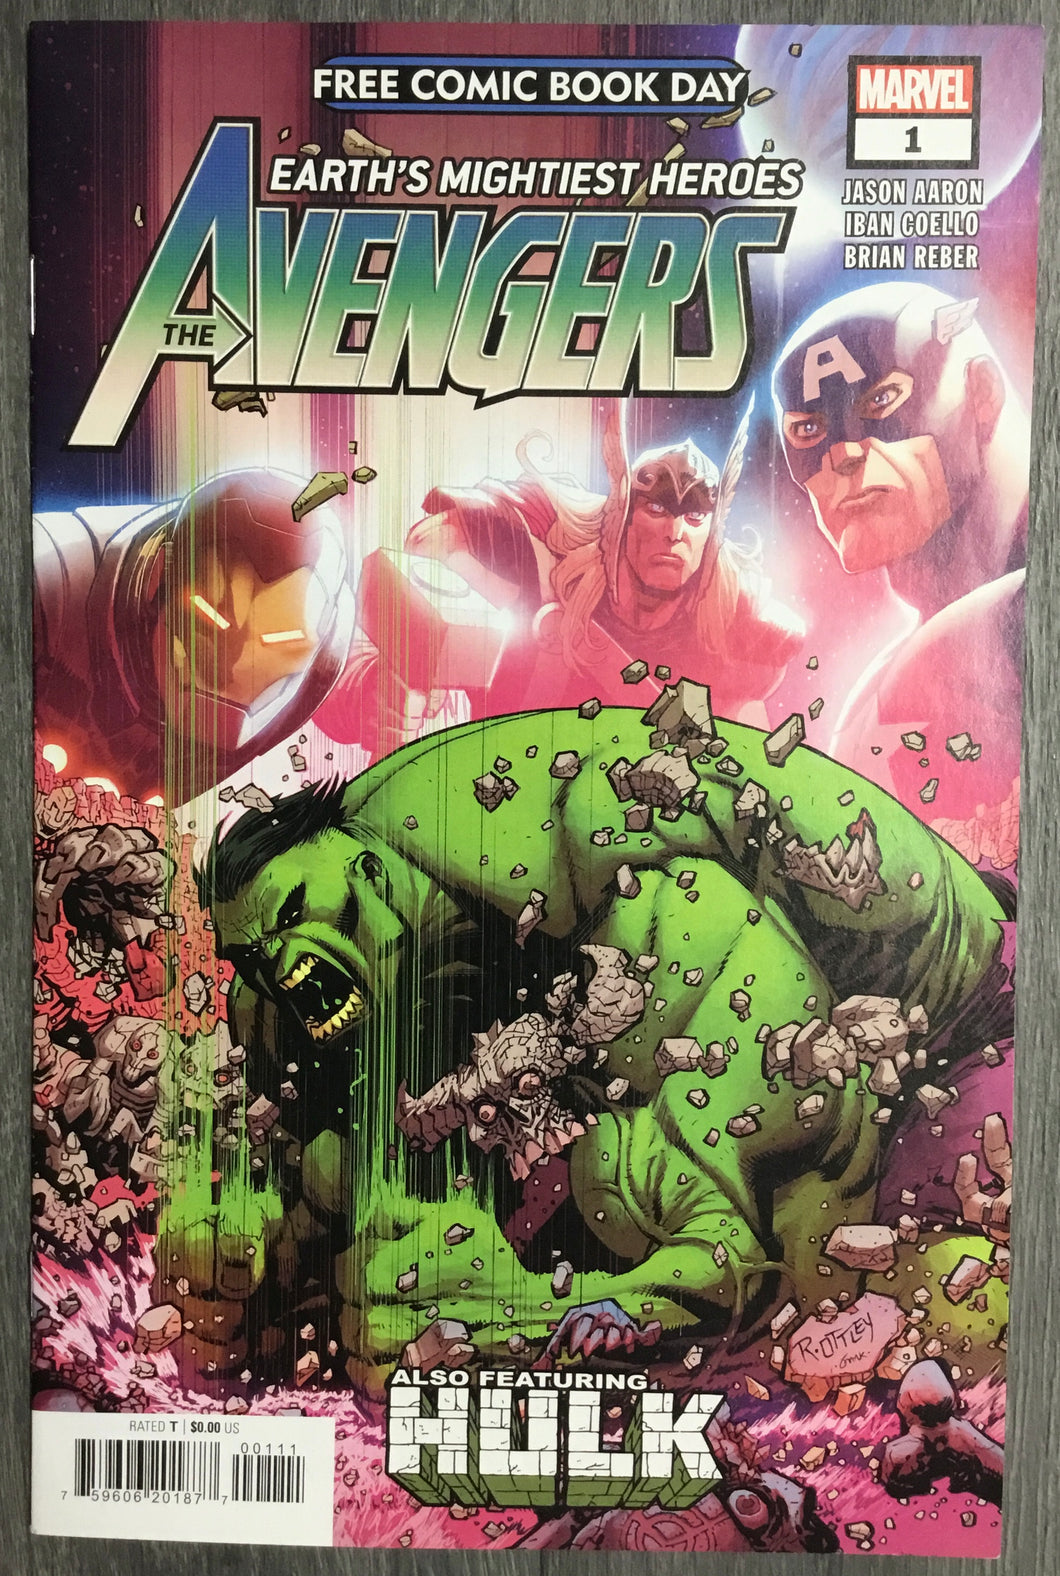 The Avengers: Earth’s Mightiest Heroes No. #1 FCBD 2021 Marvel Comics